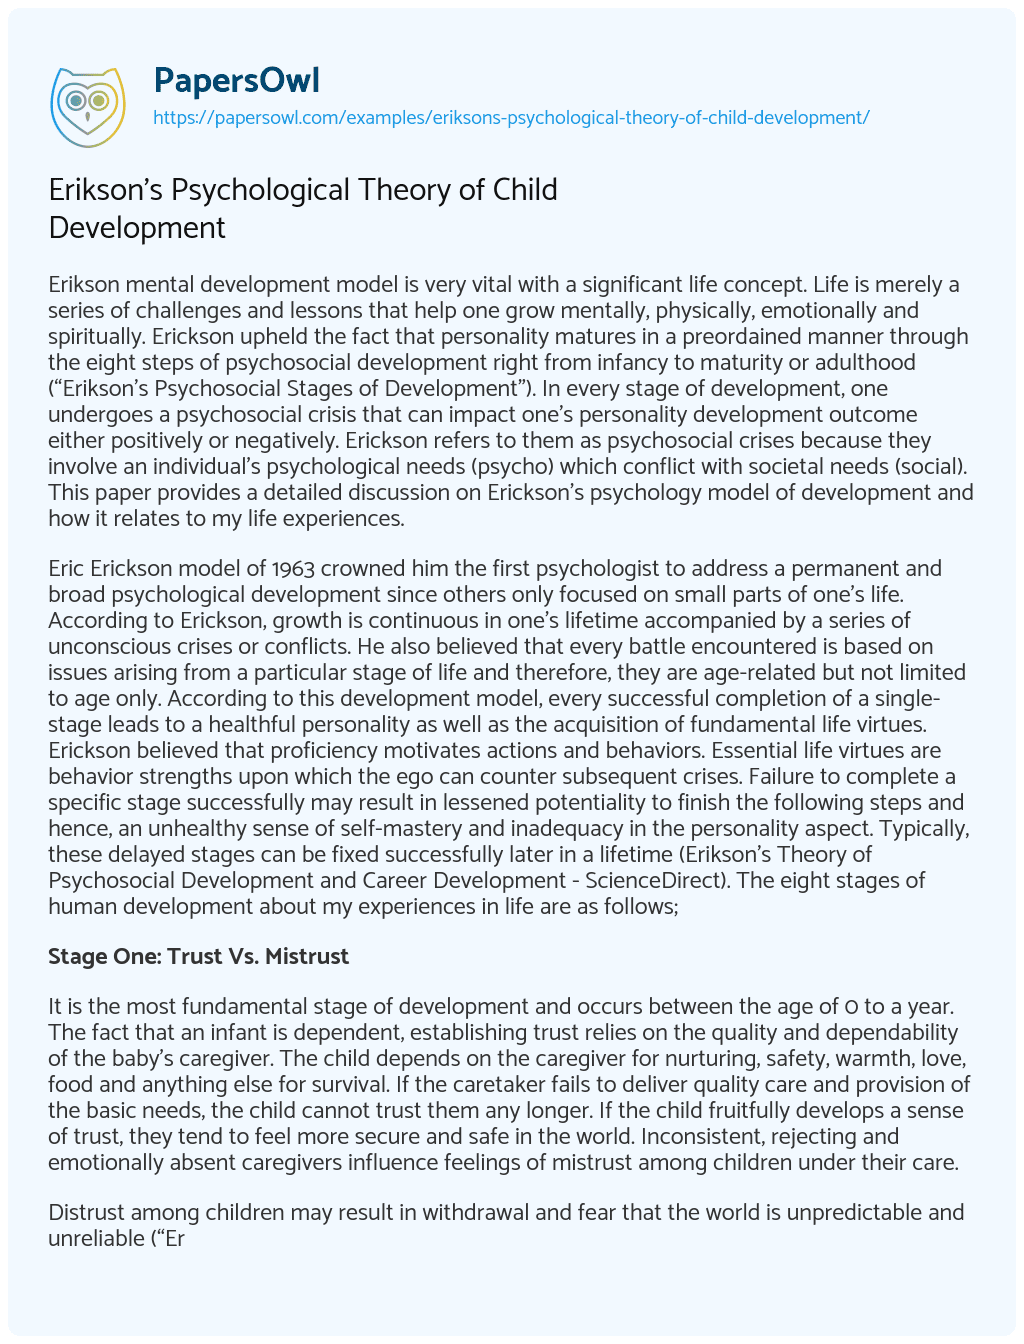 Essay on Erikson’s Psychological Theory of Child Development